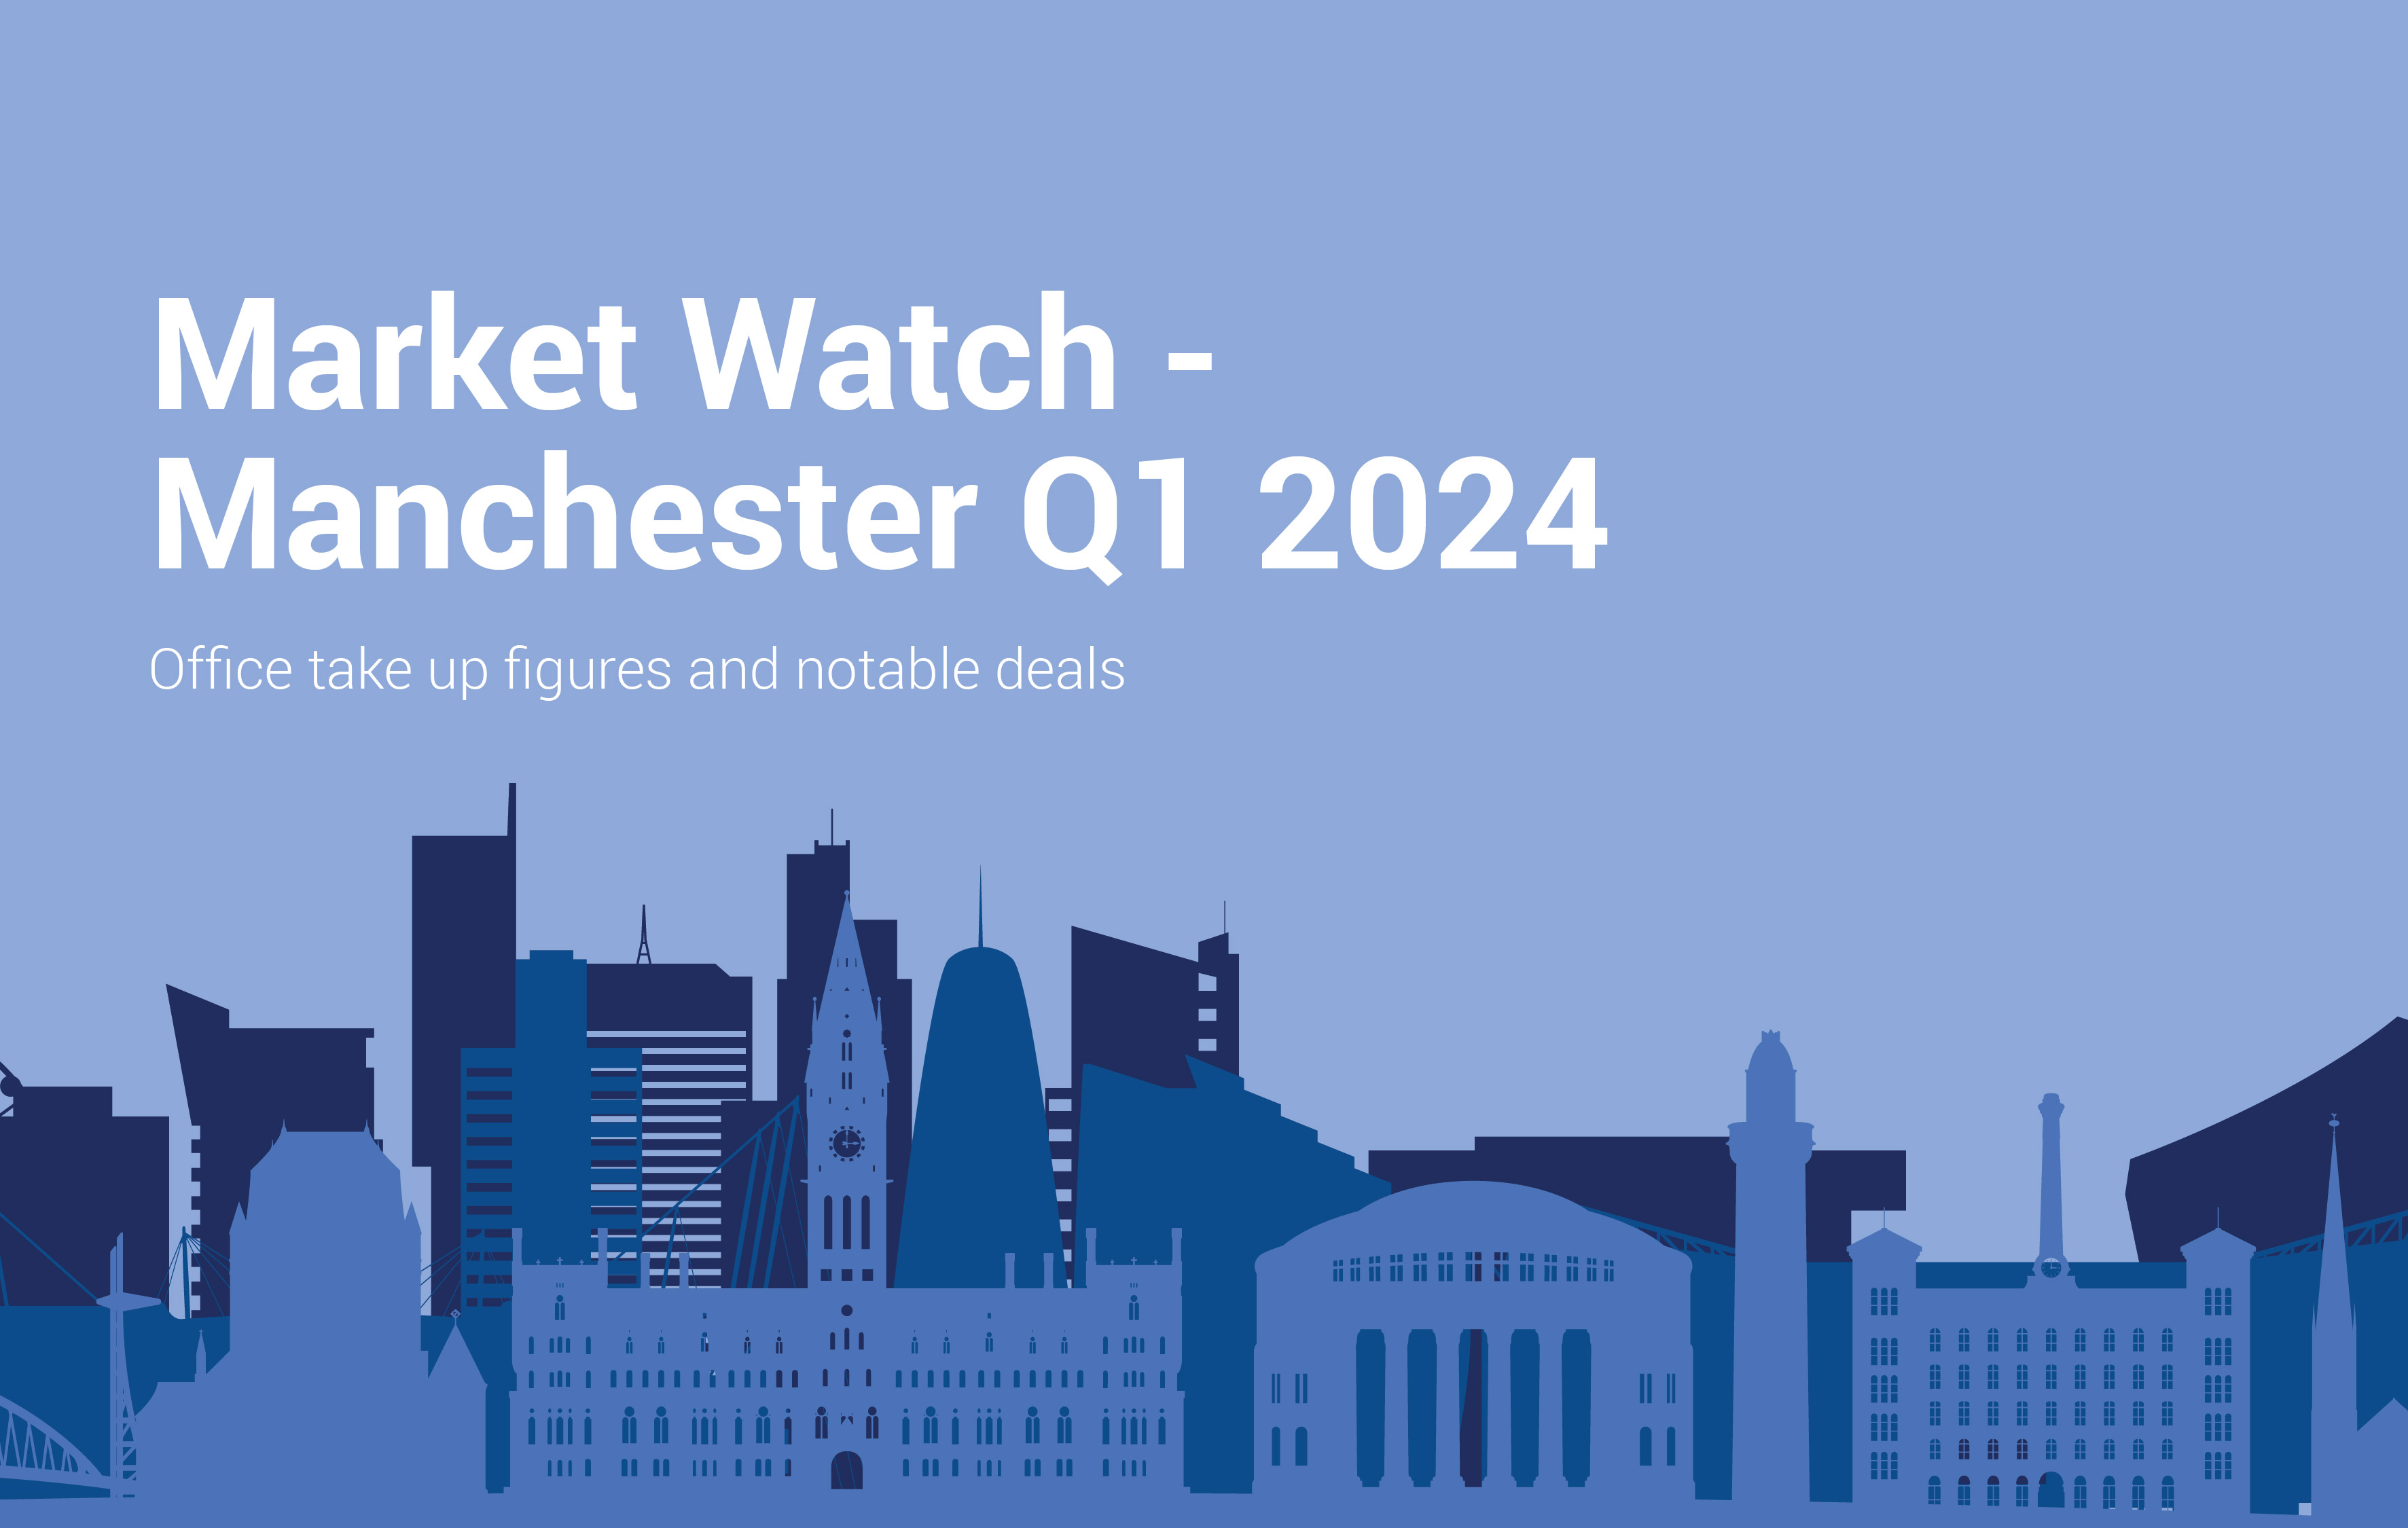 Manchester market watch Q1 24